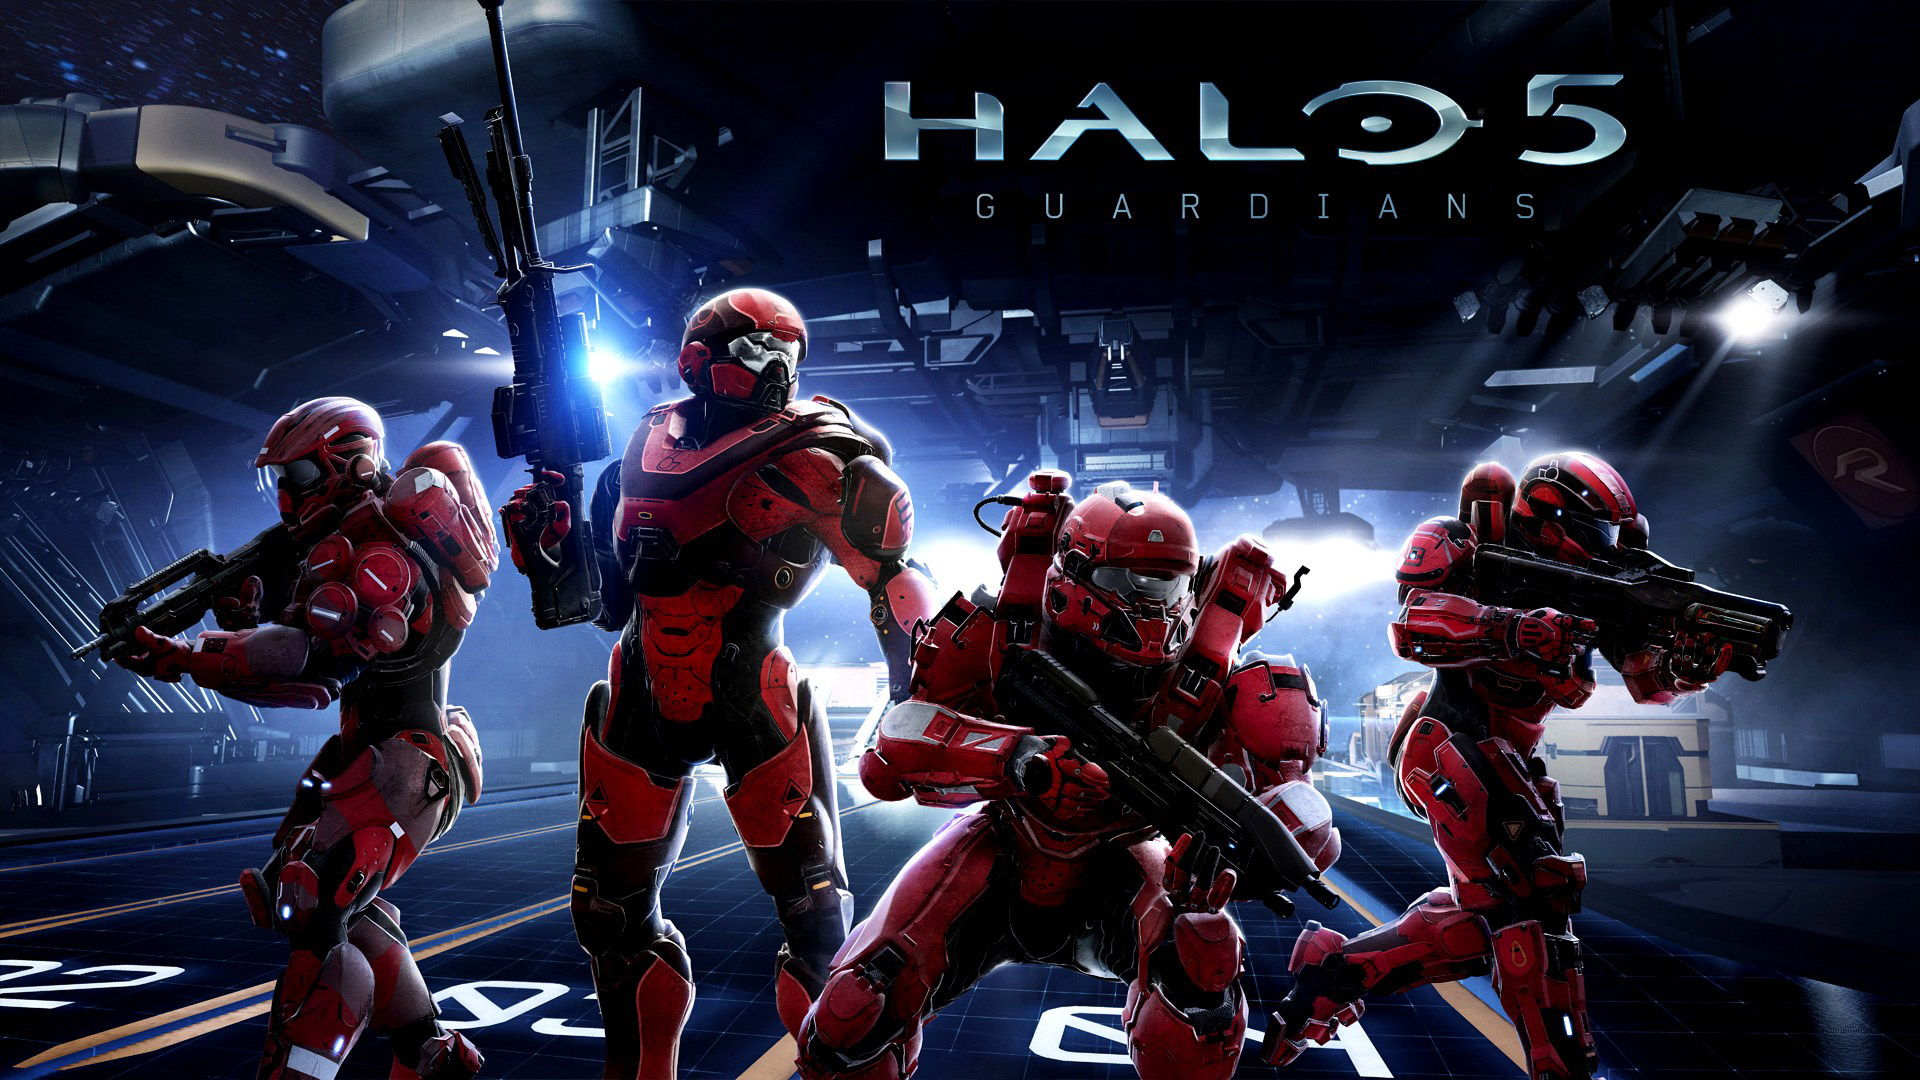 Halo 5 Guardians Wallpaper in 1920x1080 1920x1080